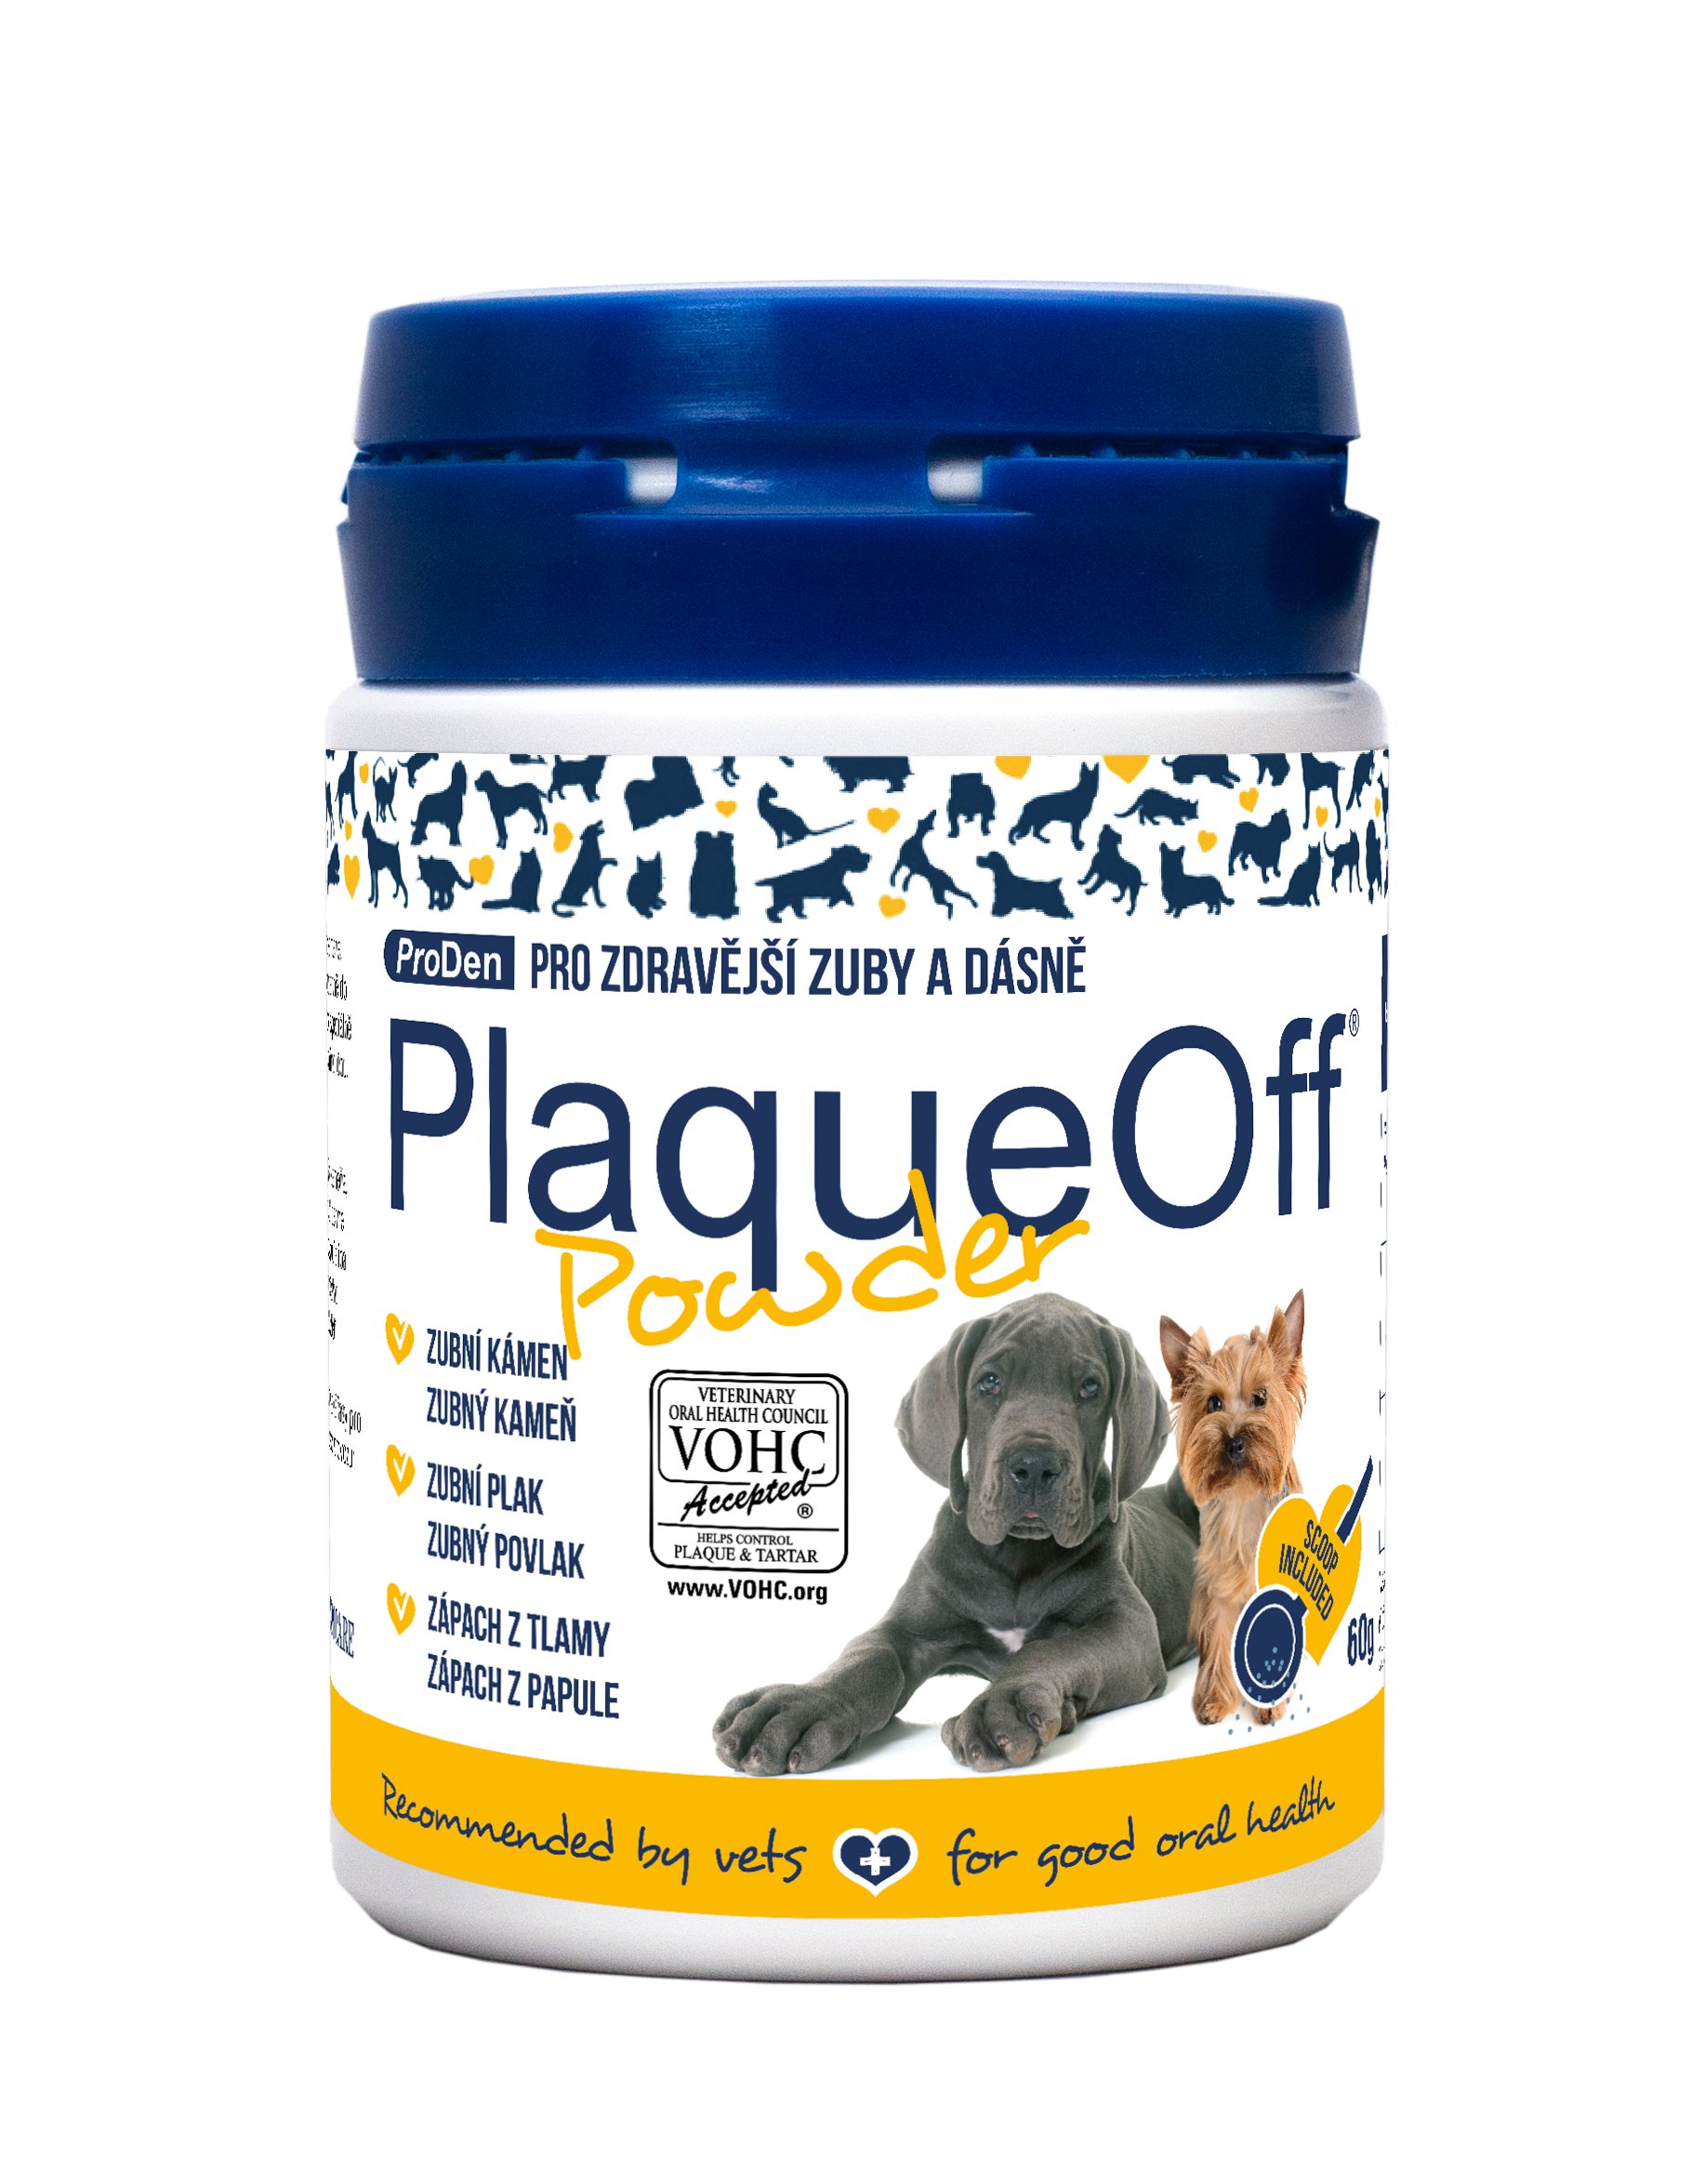 PlaqueOff Powder 60 g